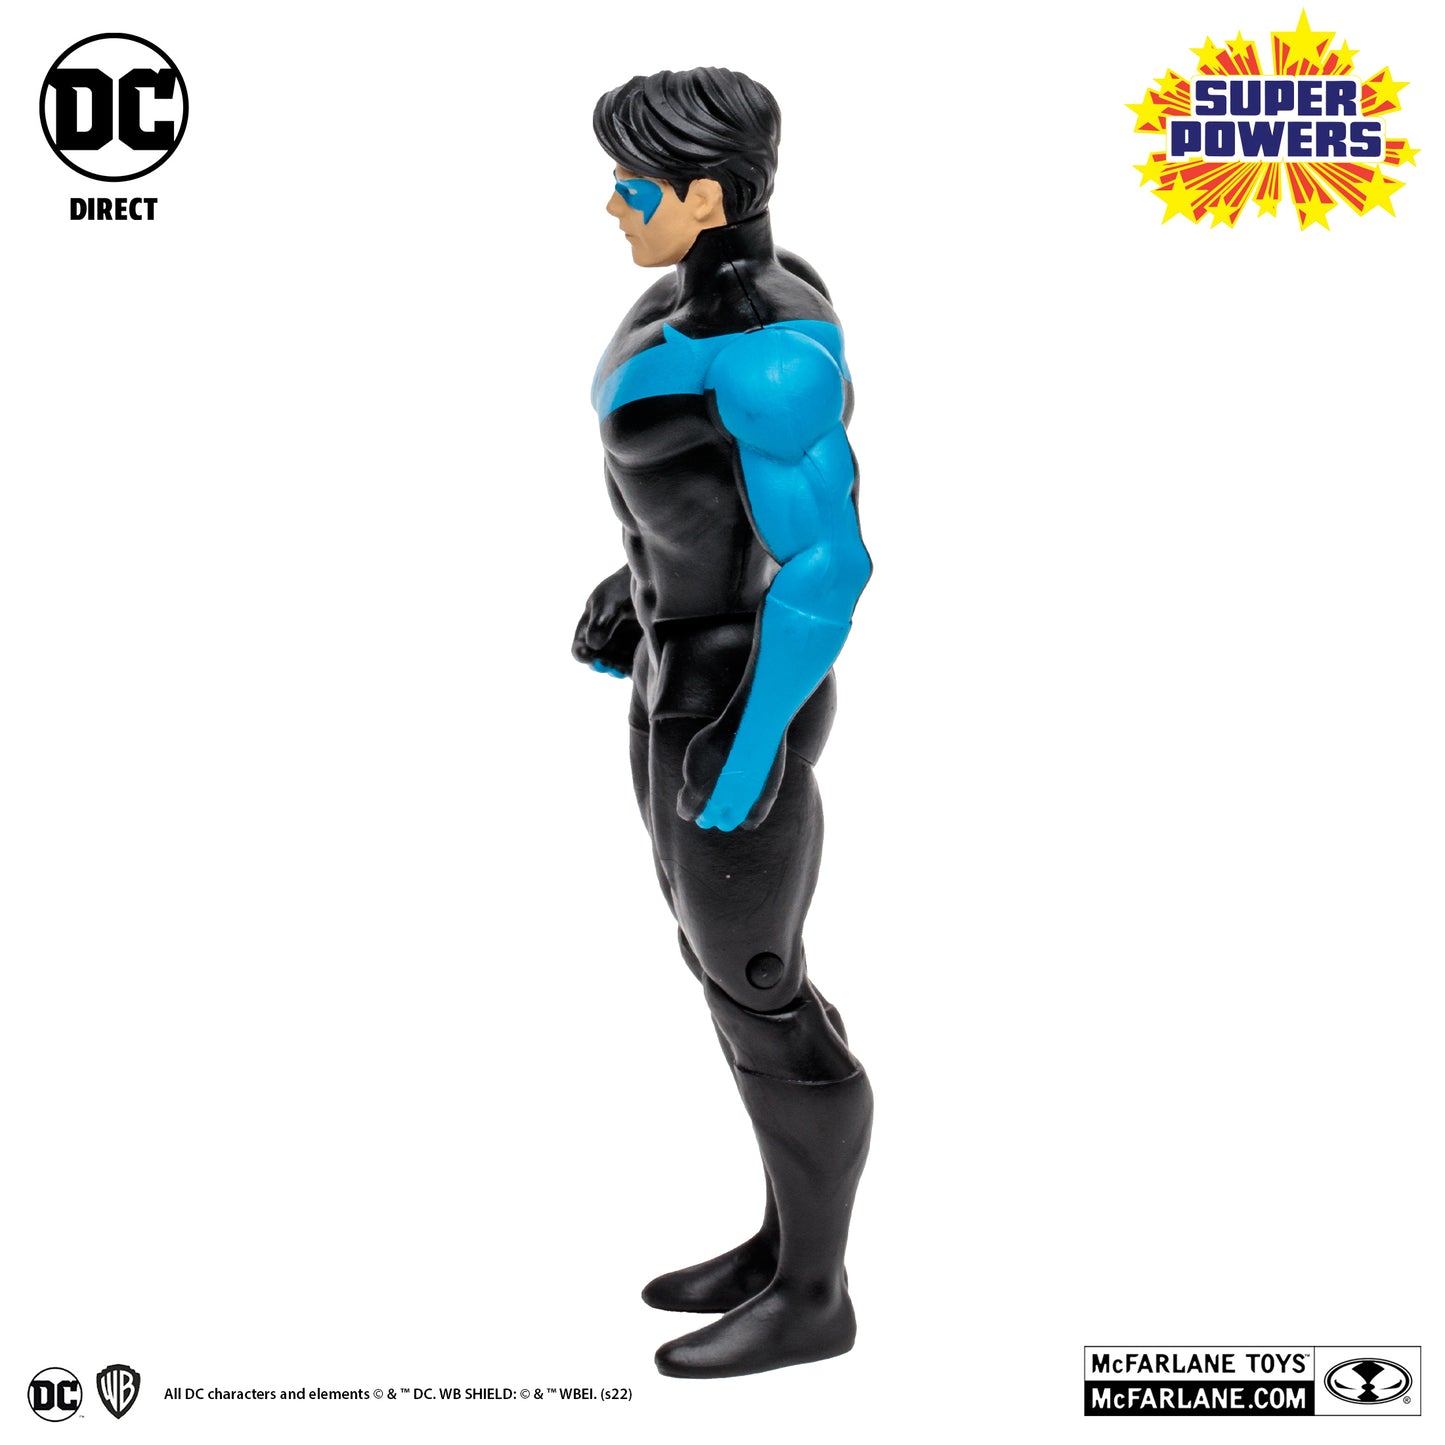 McFarlane Toys DC Direct Super Powers Nightwing